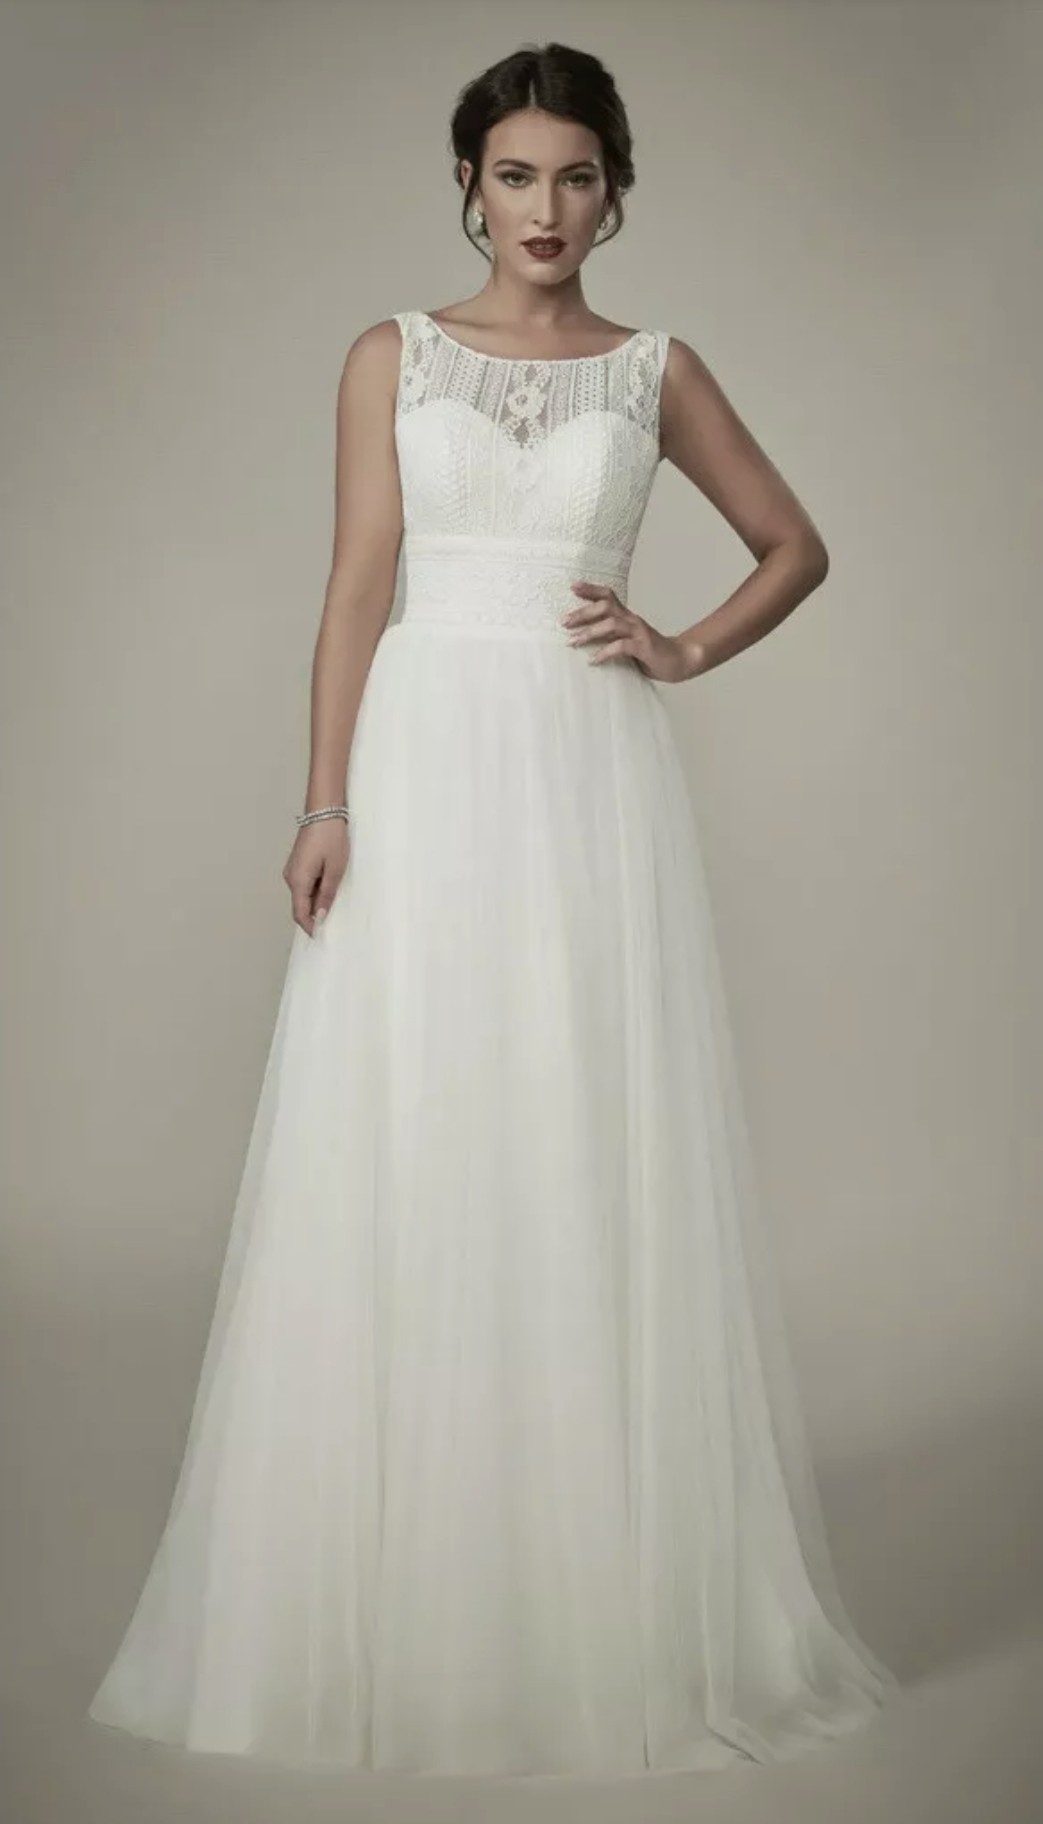 Jennifer Wren PC7925 Sample Wedding Dress Save 64% - Stillwhite